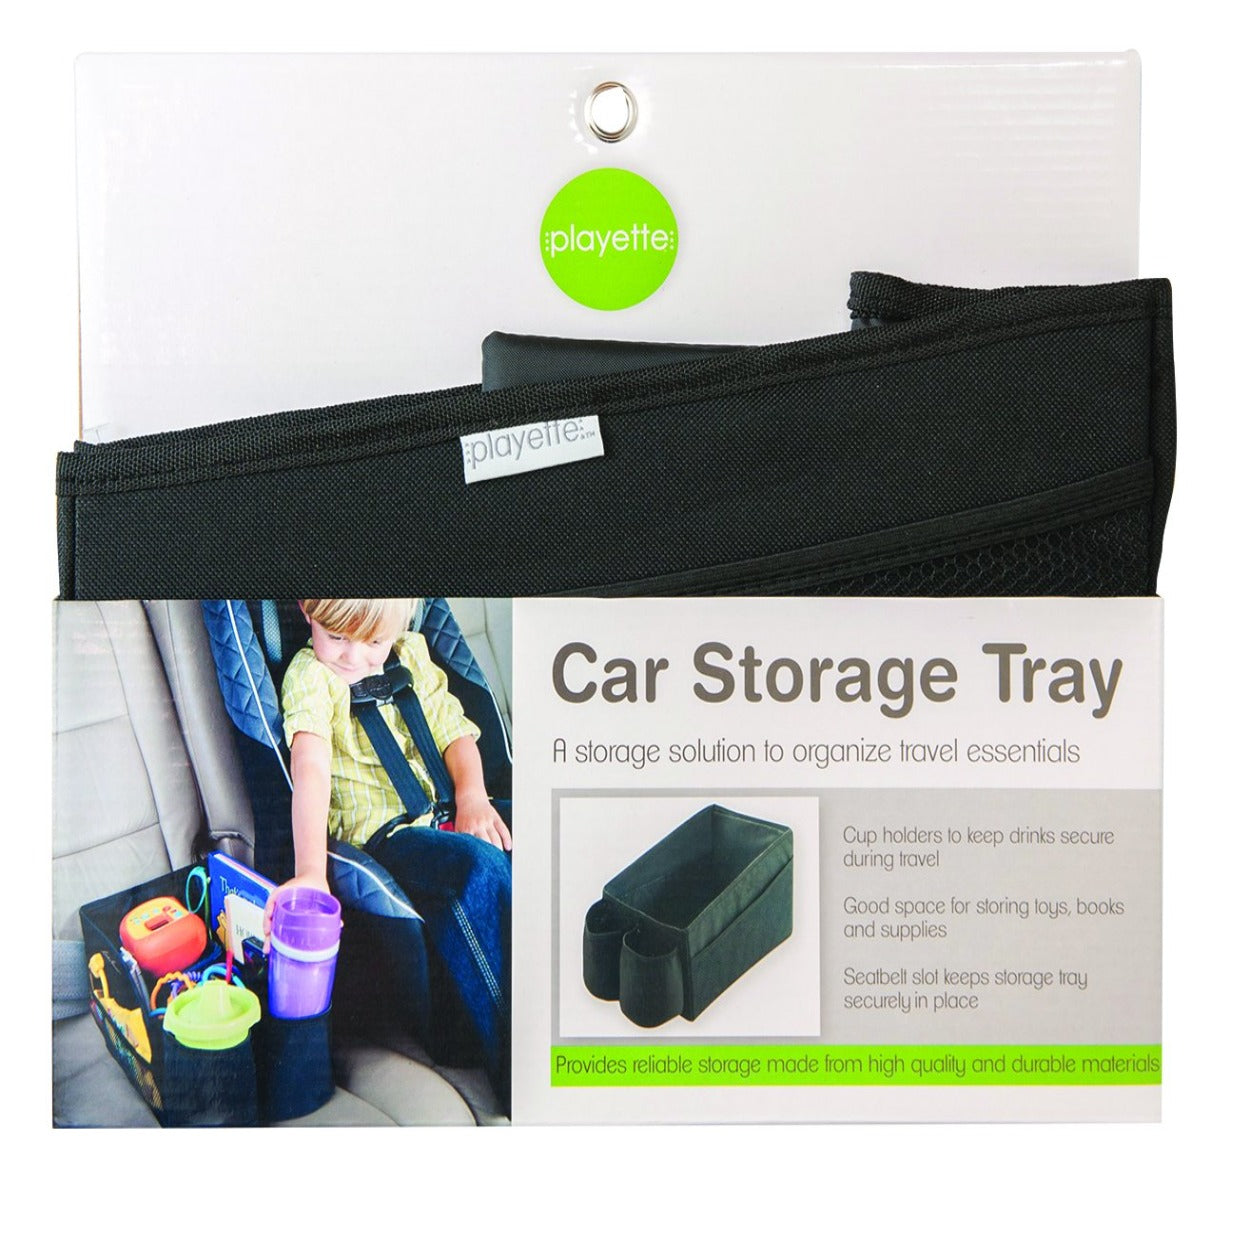 Playette Car Storage Tray